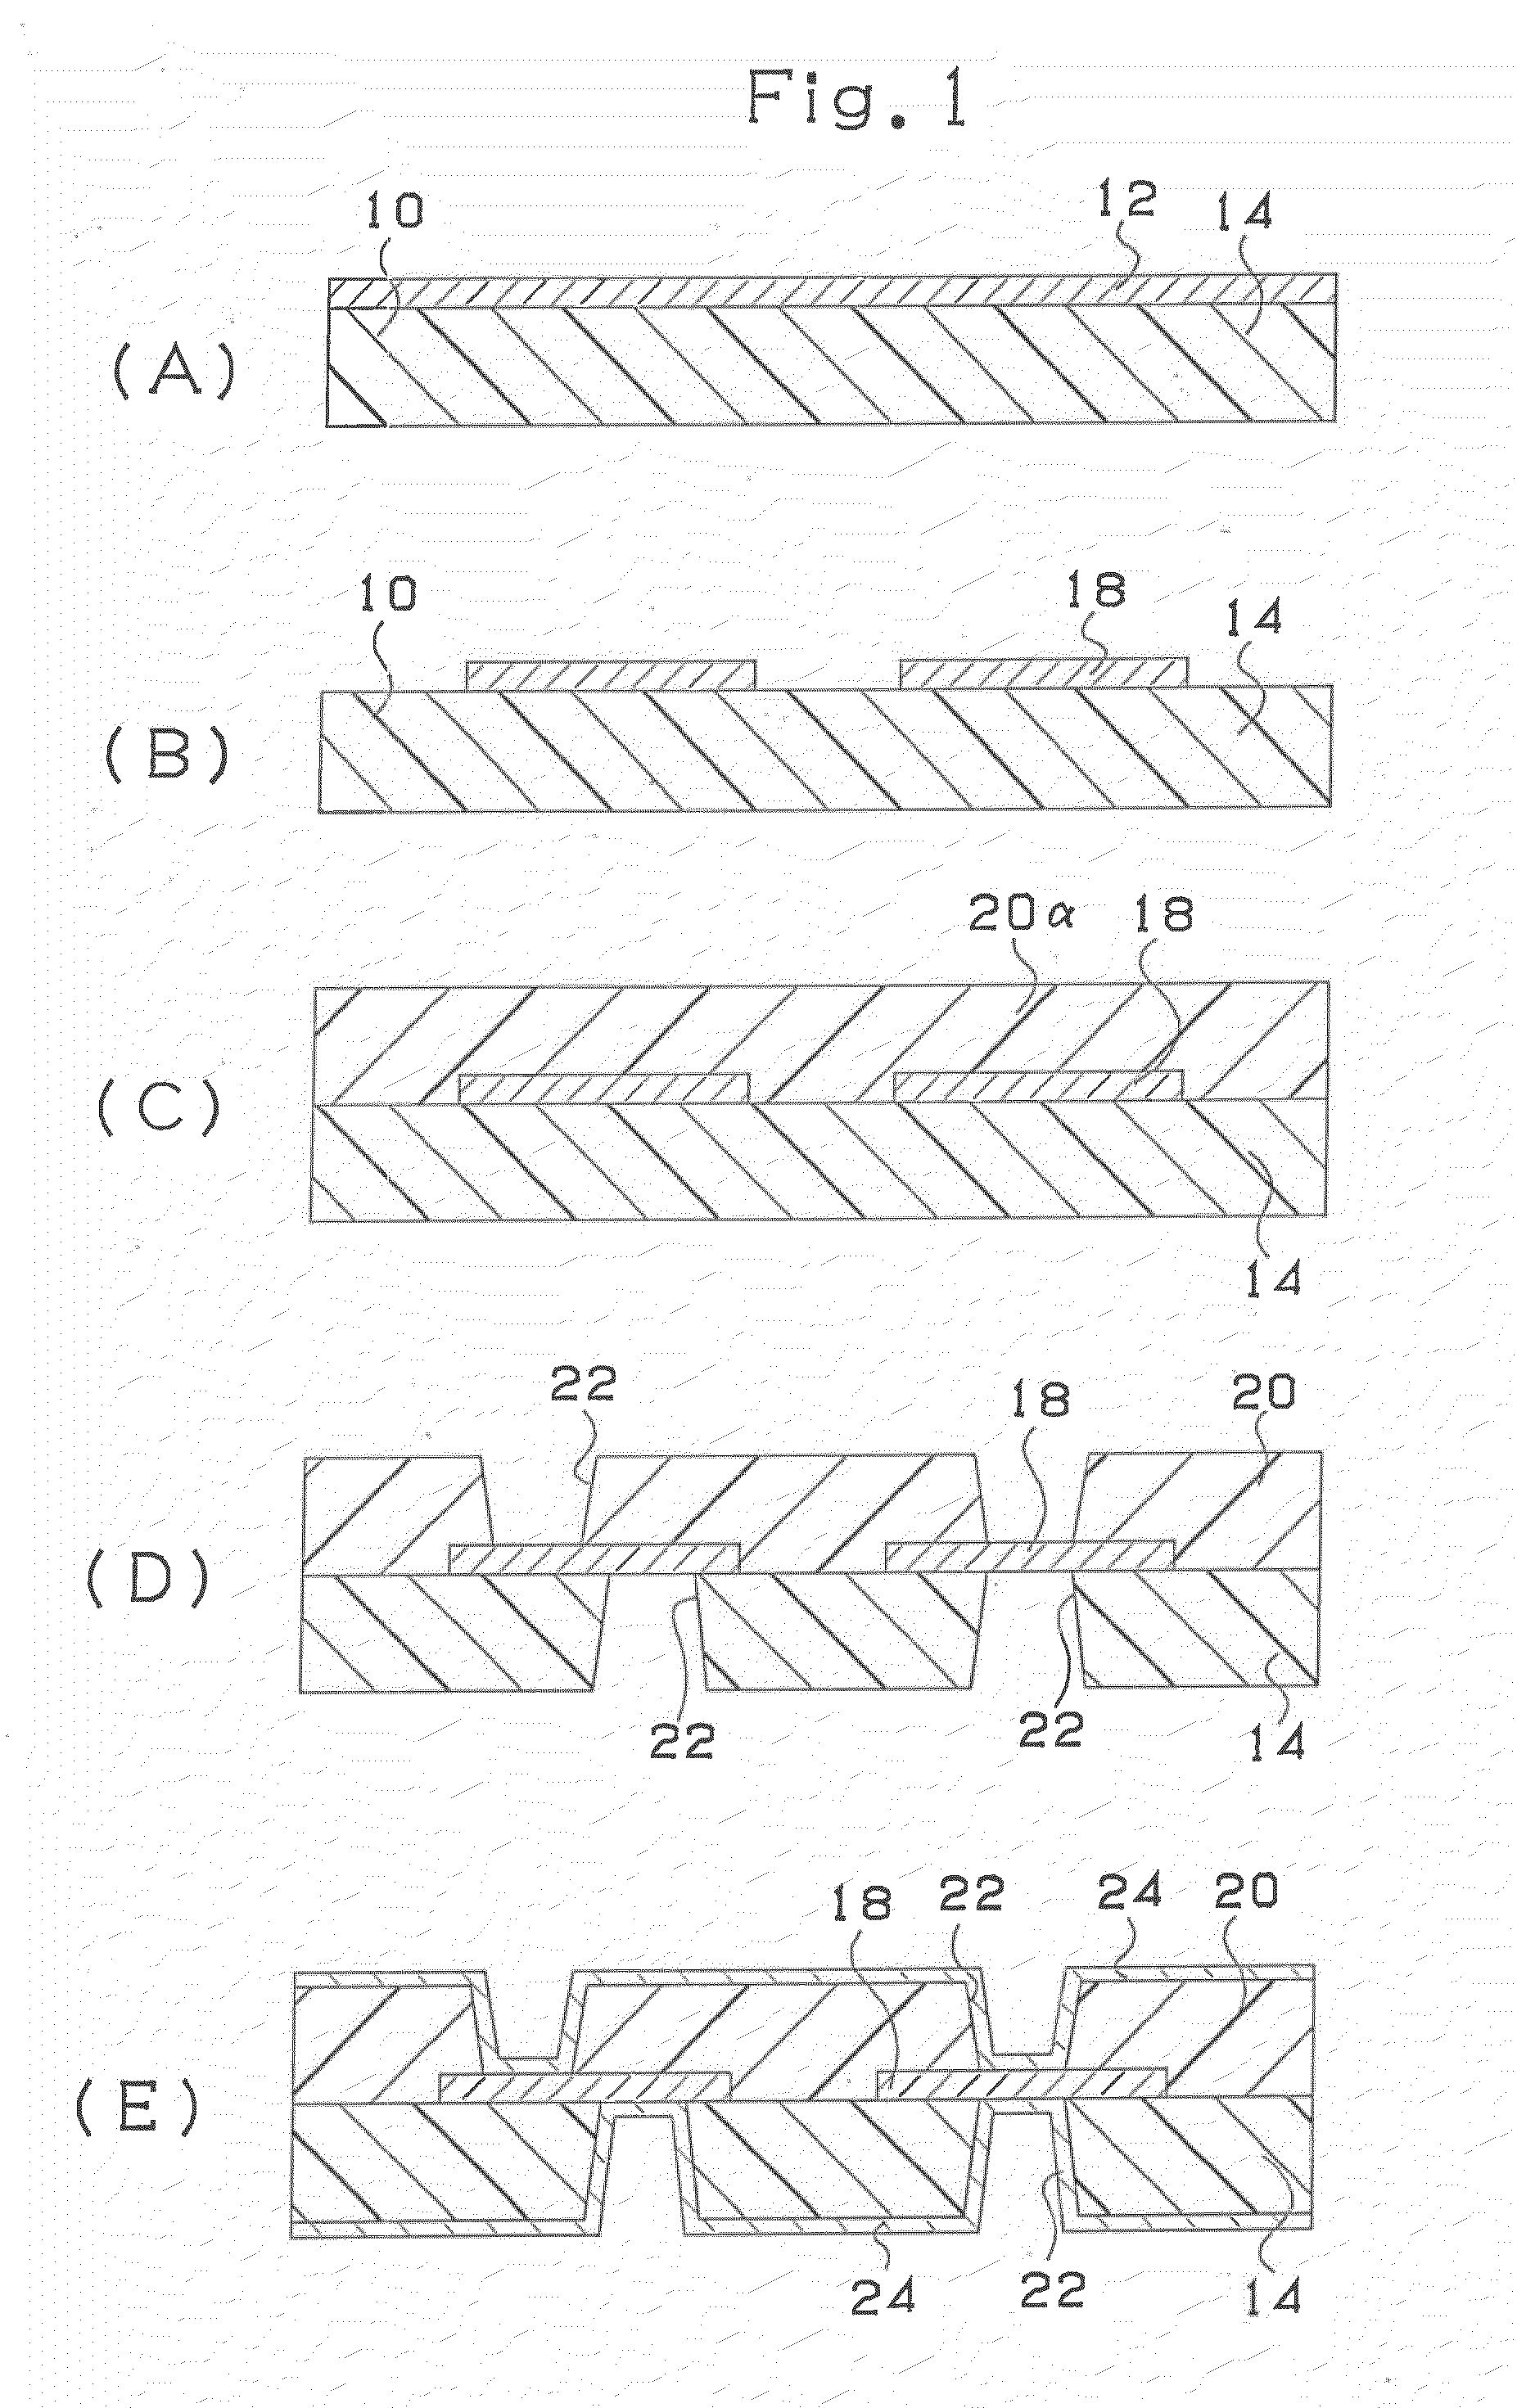 Multi-layer printed circuit board and method of manufacturing multilayer printed circuit board